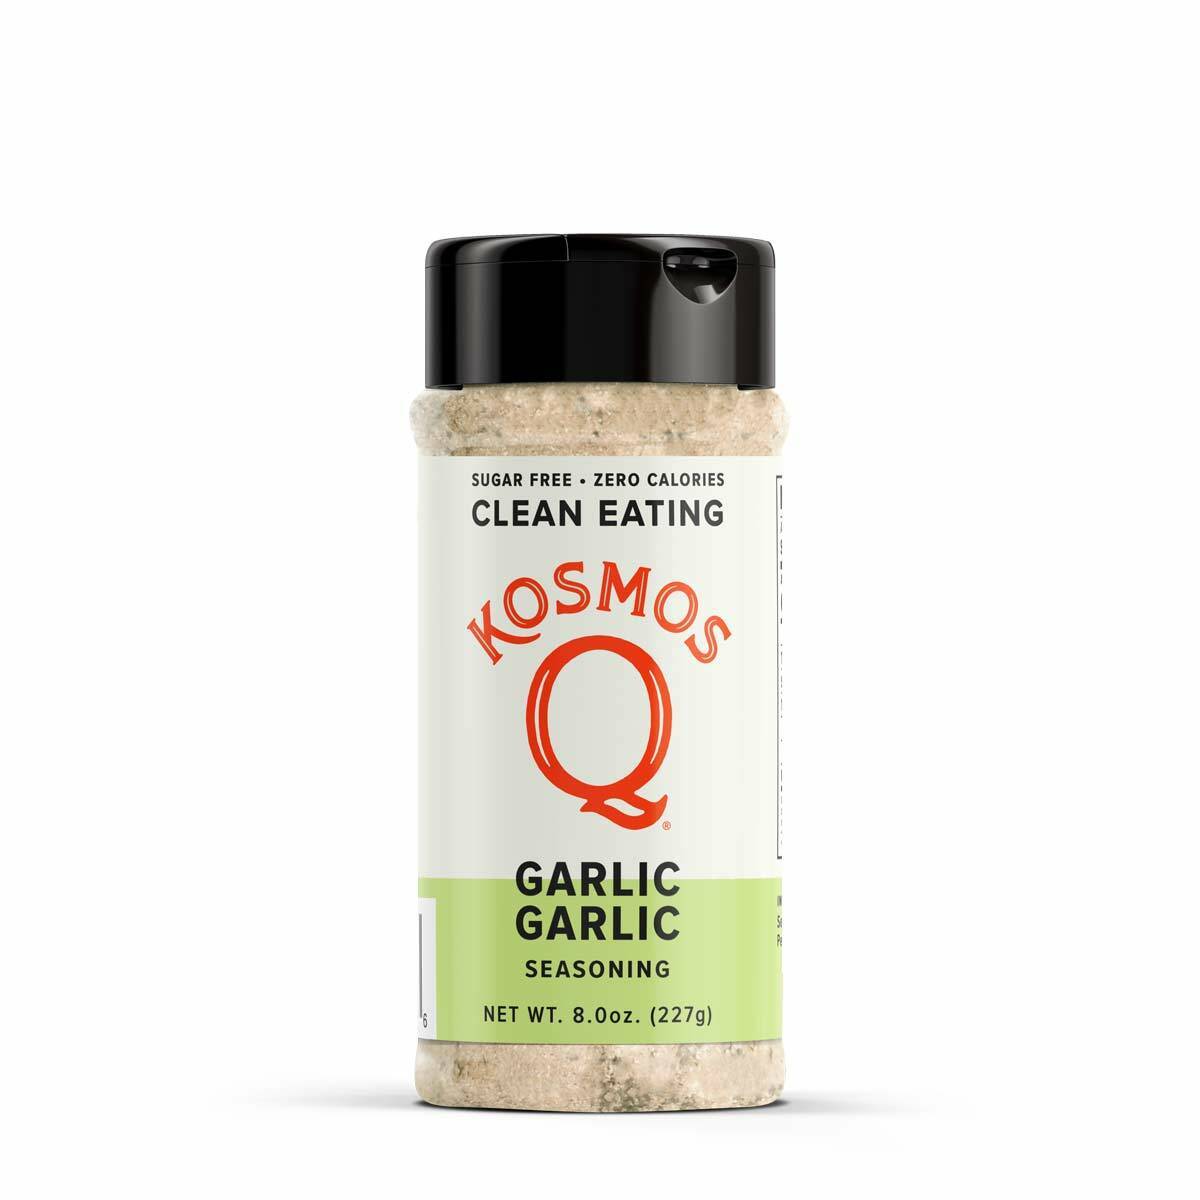 Kosmo's Q Clean Eating Seasonings Garlic Garlic - Paleo & Keto Clean Eating Seasoning